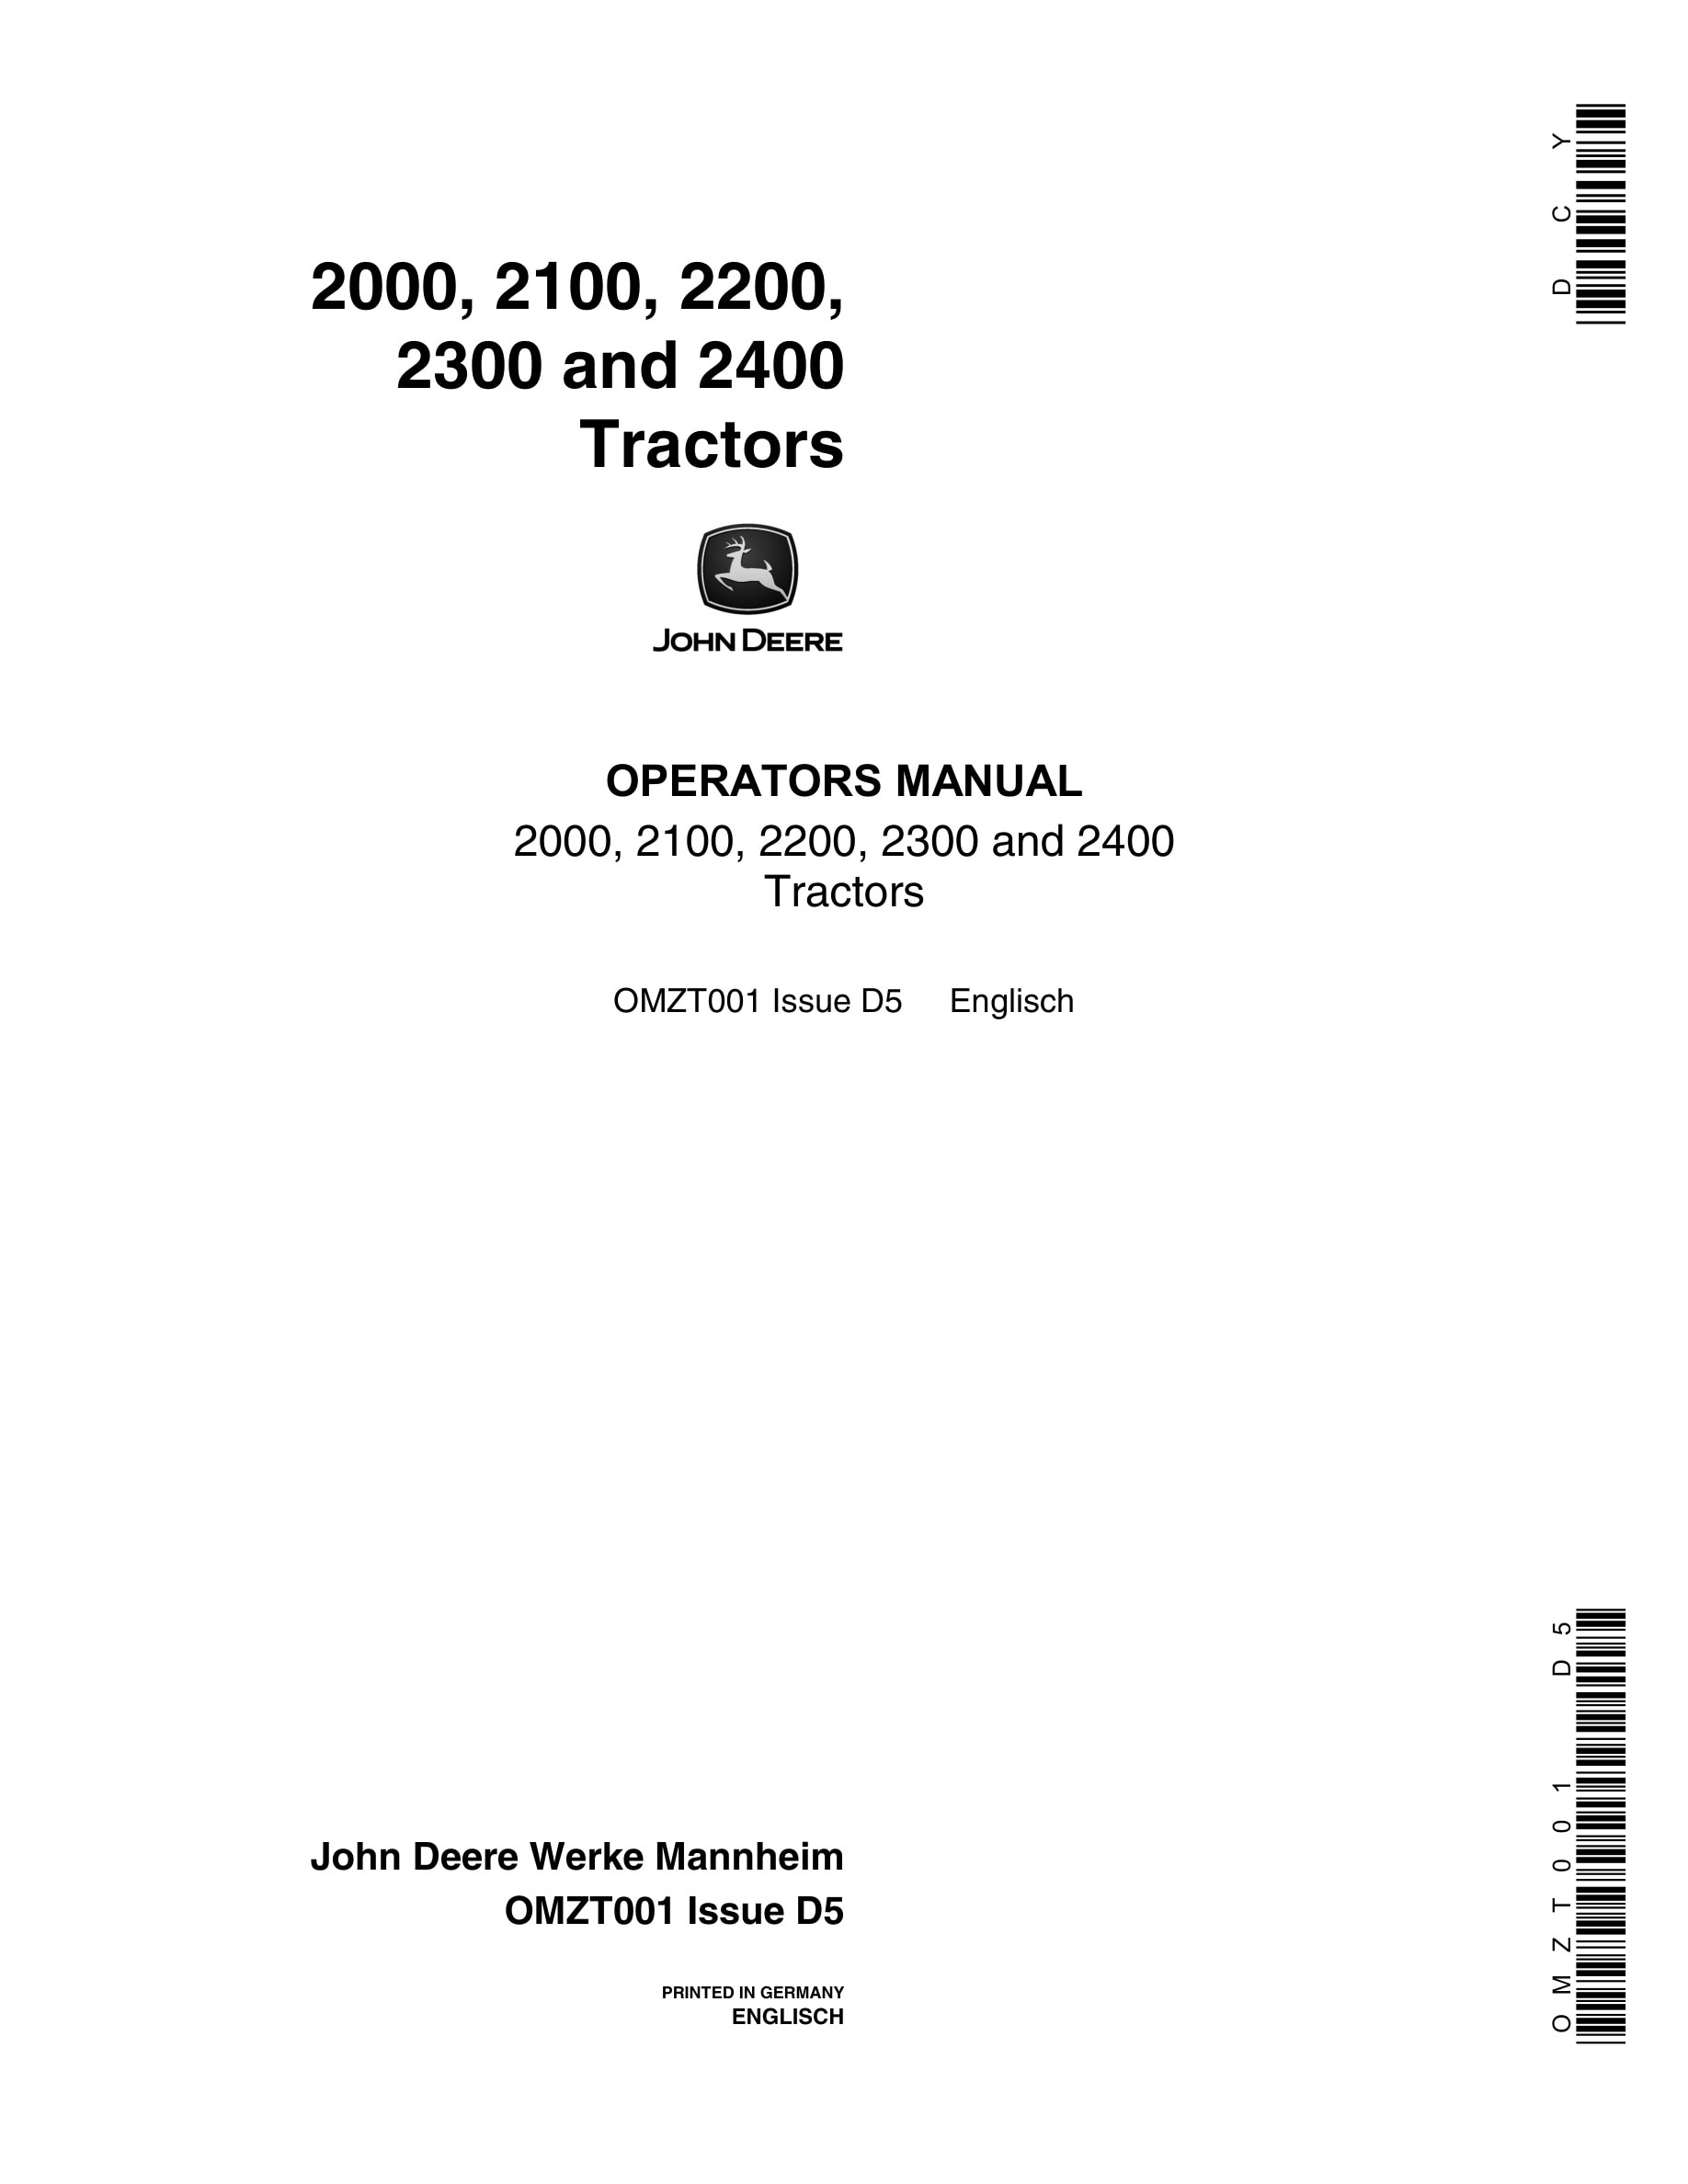 John Deere 2000, 2100, 2200, 2300 And 2400 Tractors Operator Manuals Omzt001-1